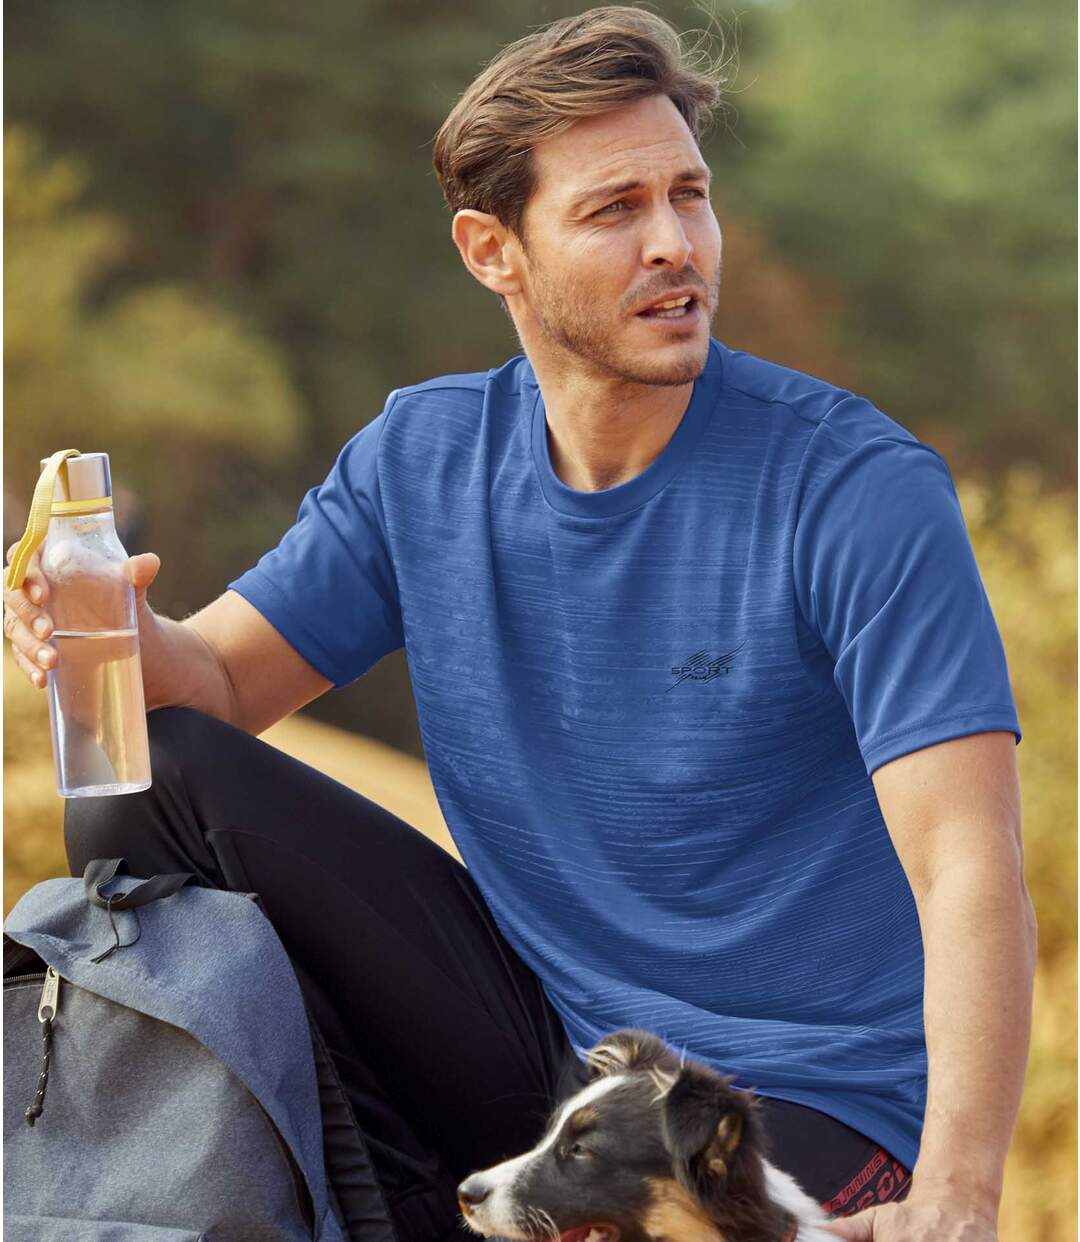 Sada 3 polyesterových triček Sportmen Atlas For Men